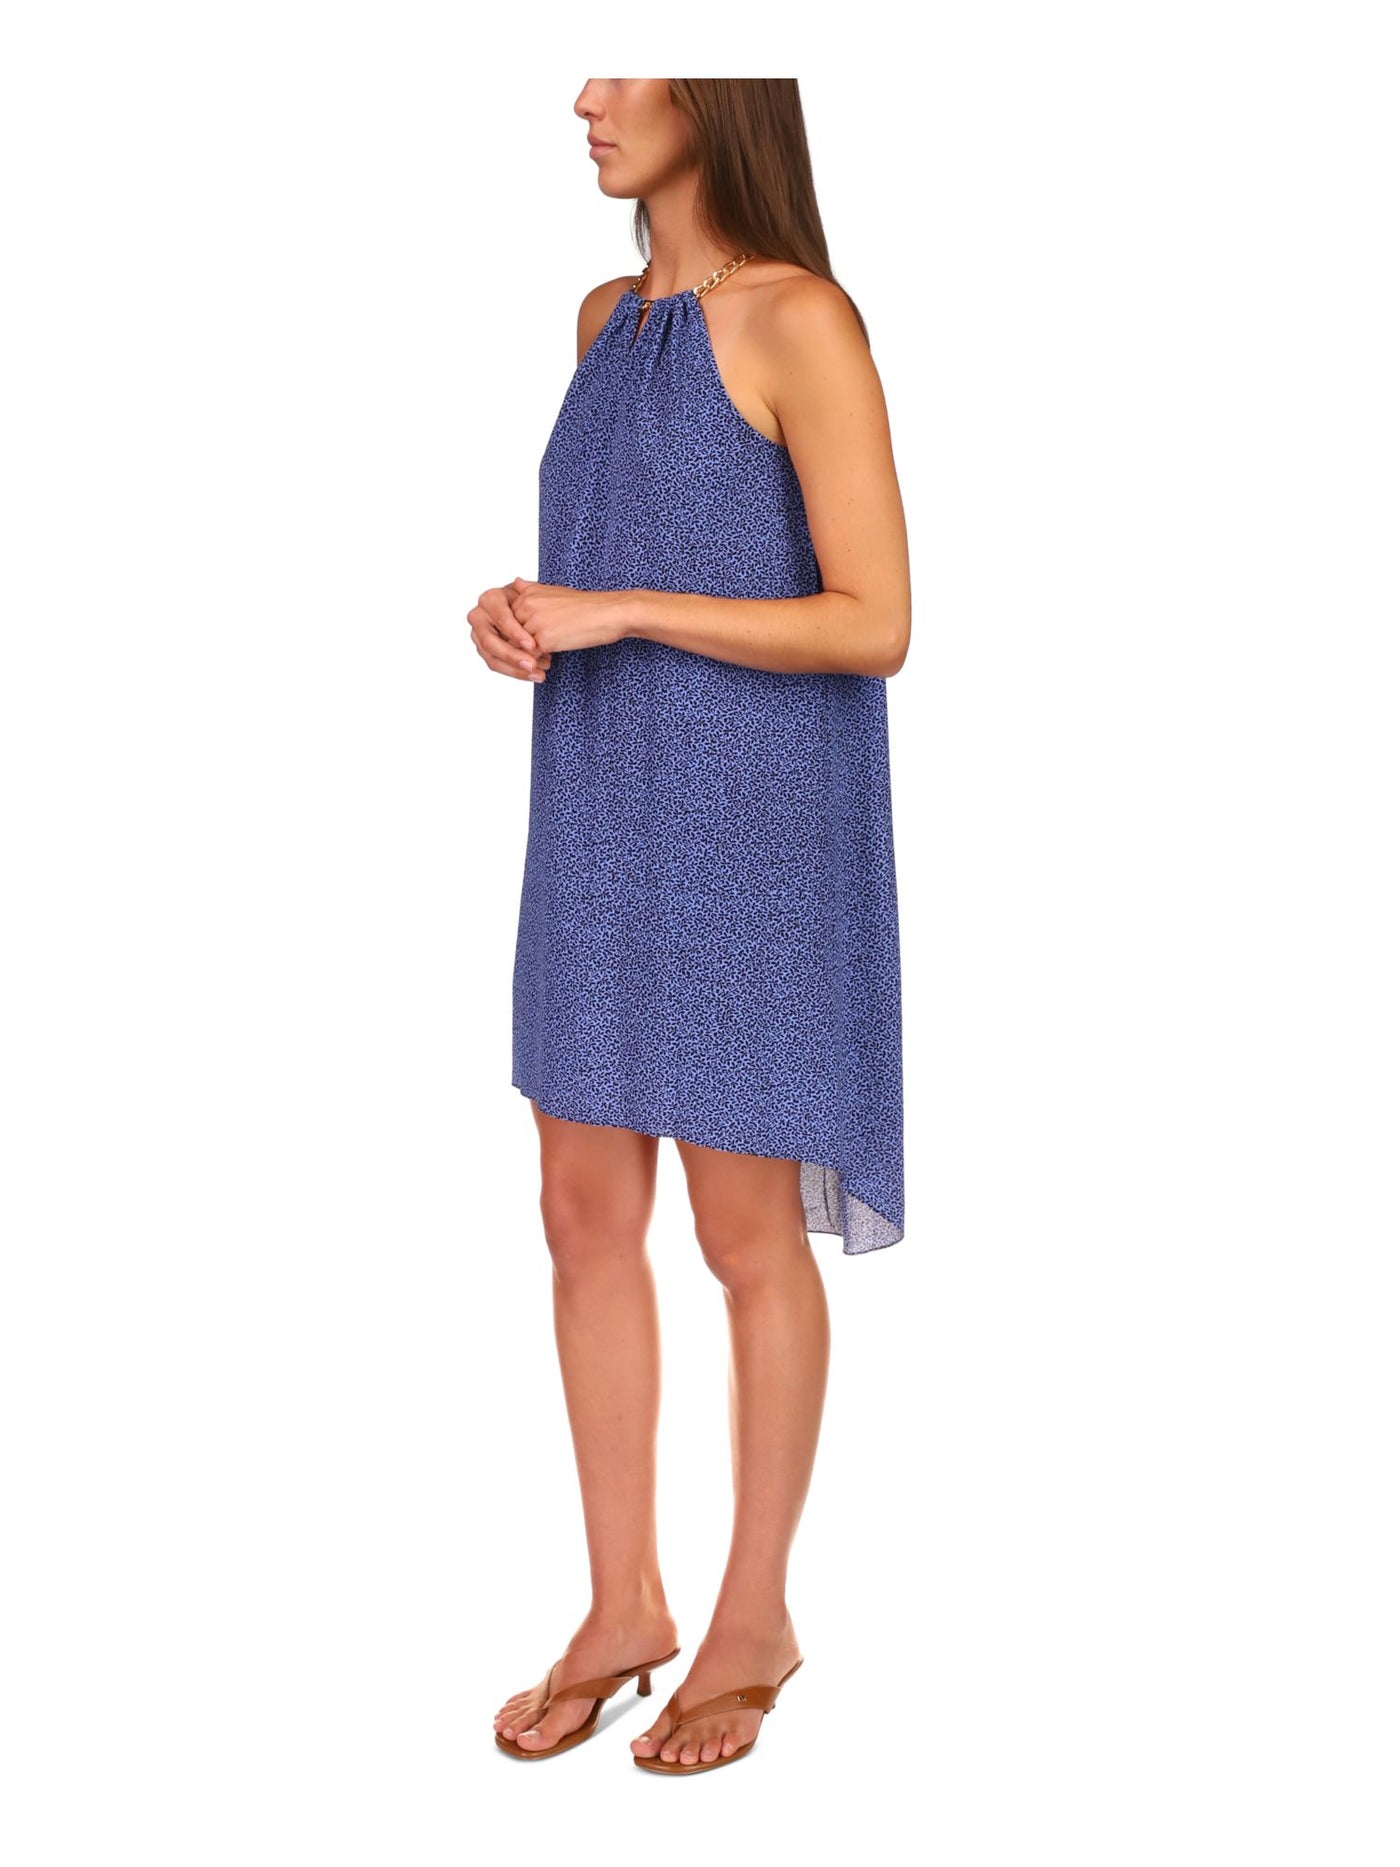 MICHAEL MICHAEL KORS Womens Blue Printed Sleeveless Round Neck Knee Length Shift Dress S